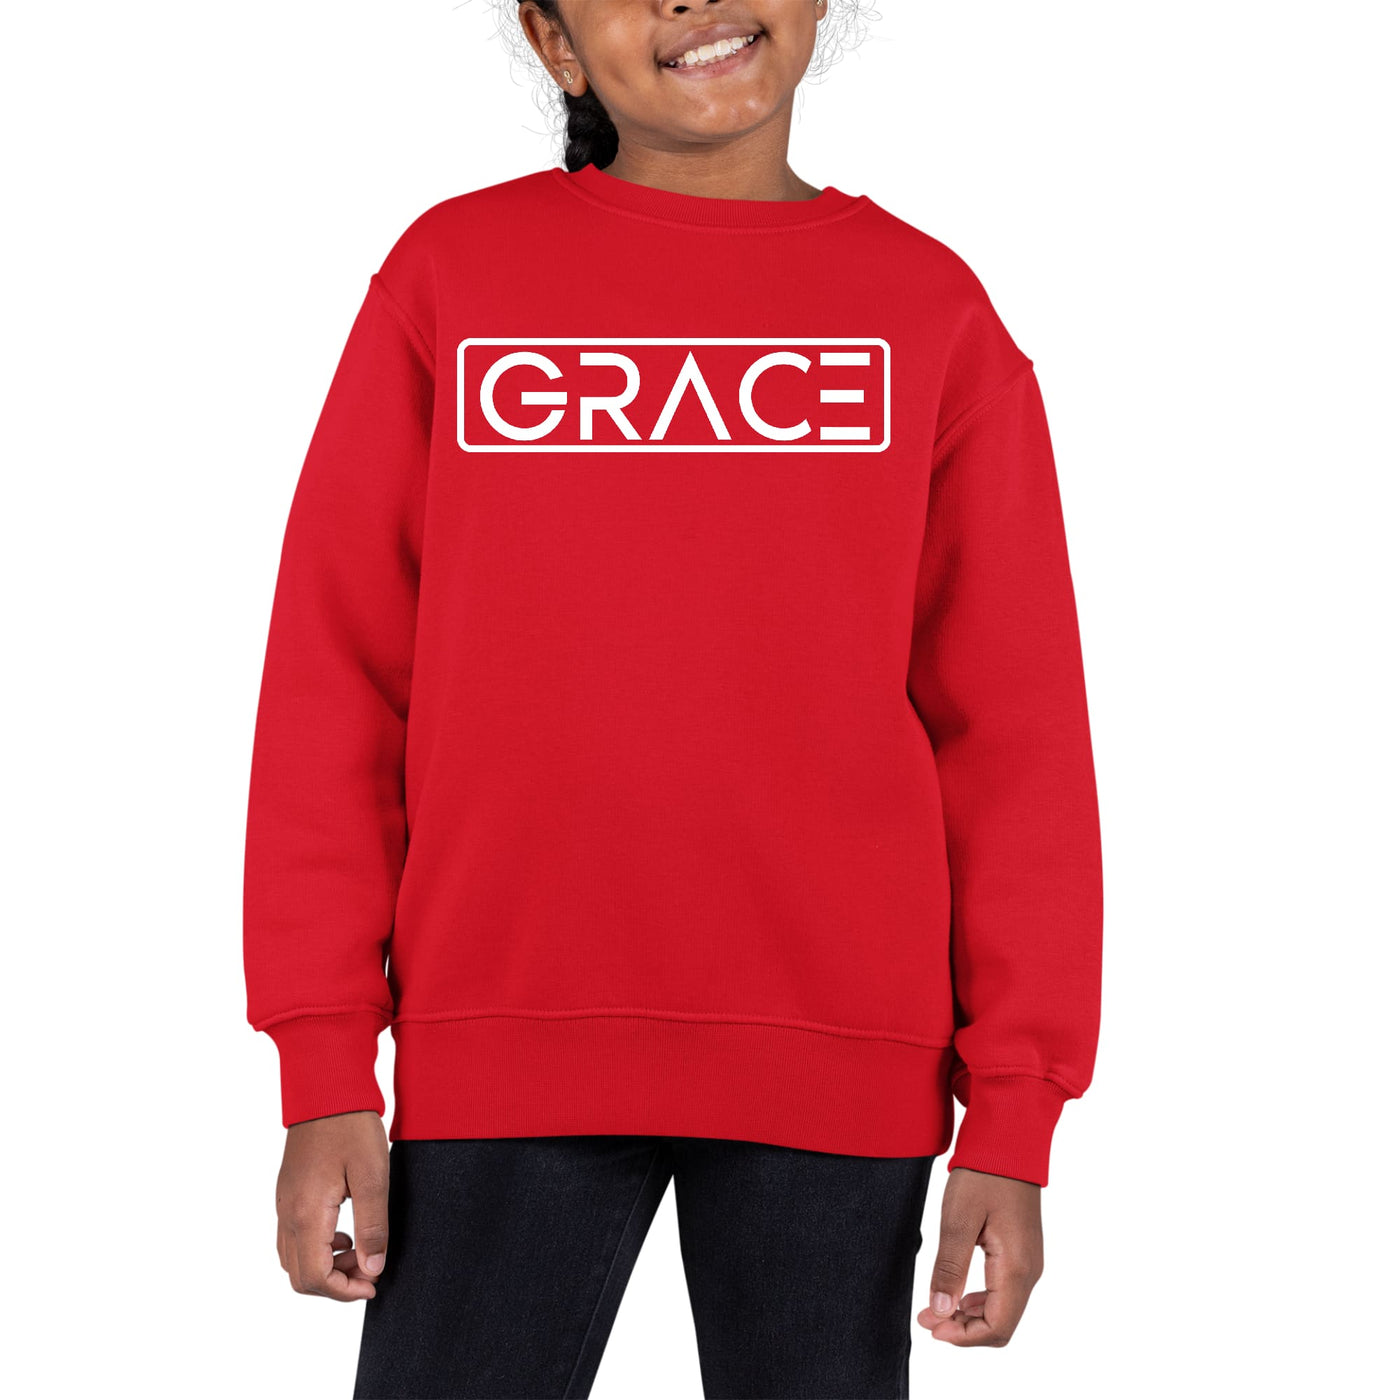 Youth Graphic Sweatshirt Grace - Girls | Sweatshirts